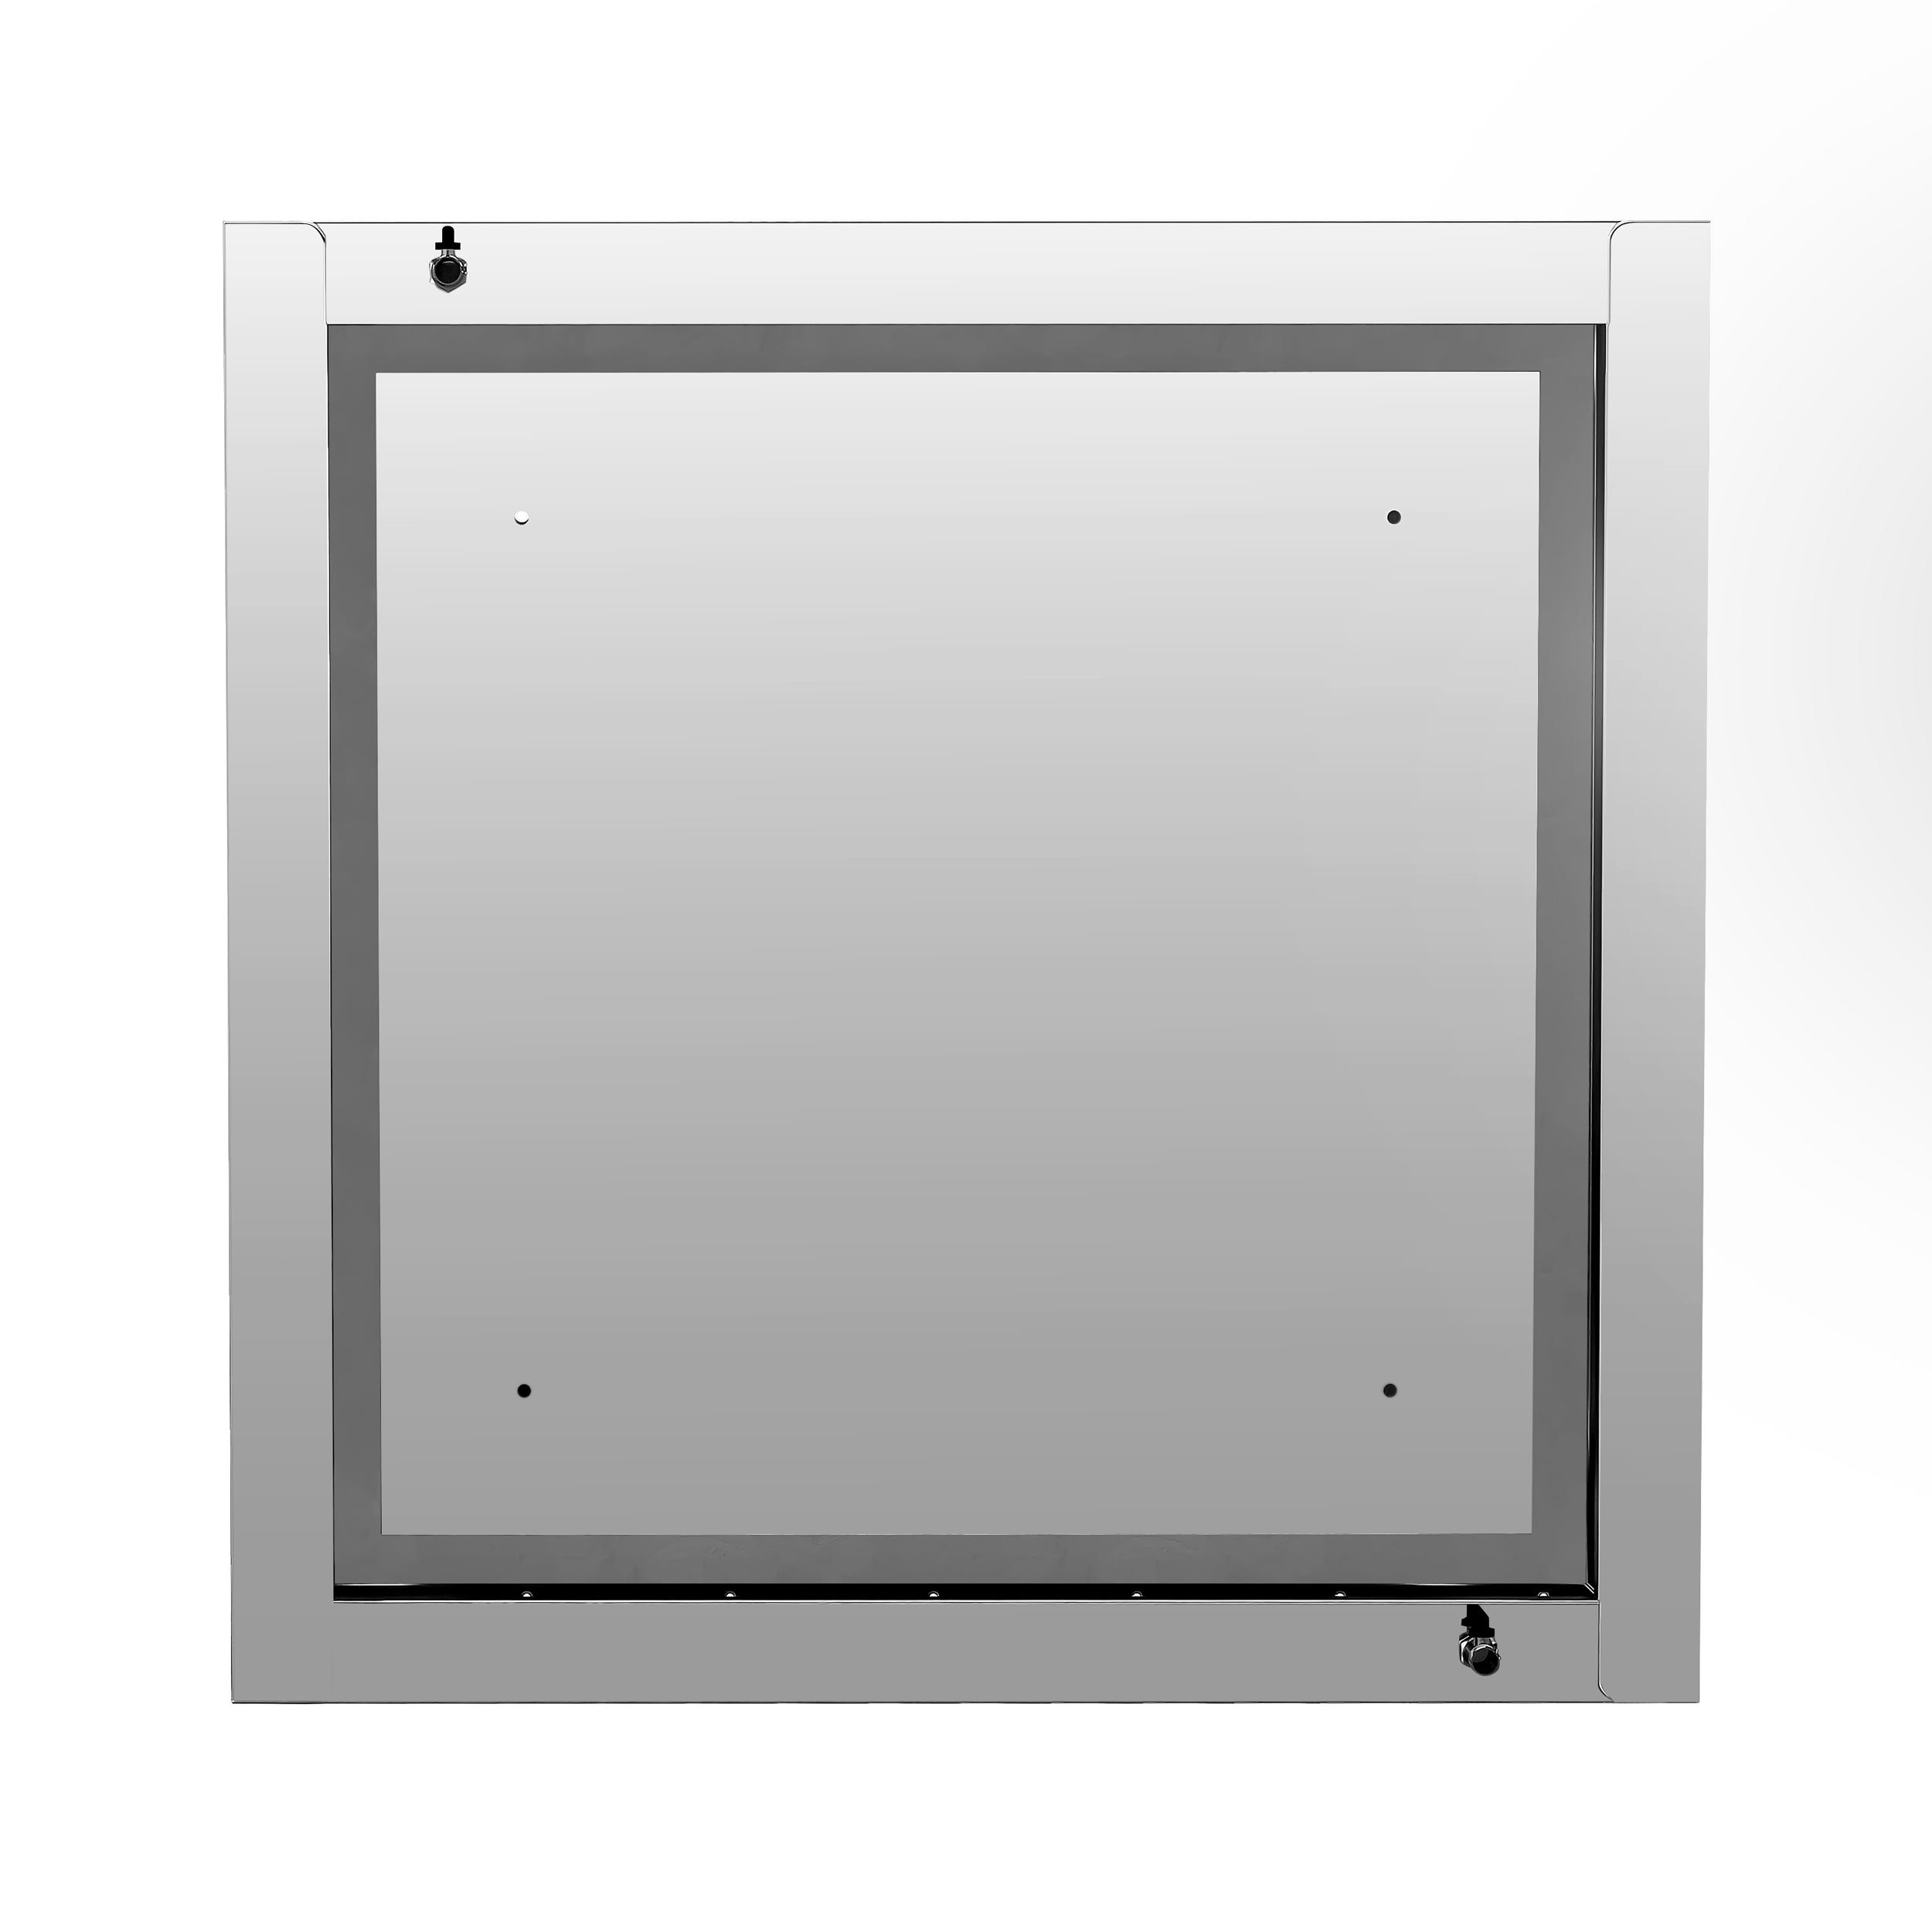 Kondenshette 1,0 m - med filter og belysning